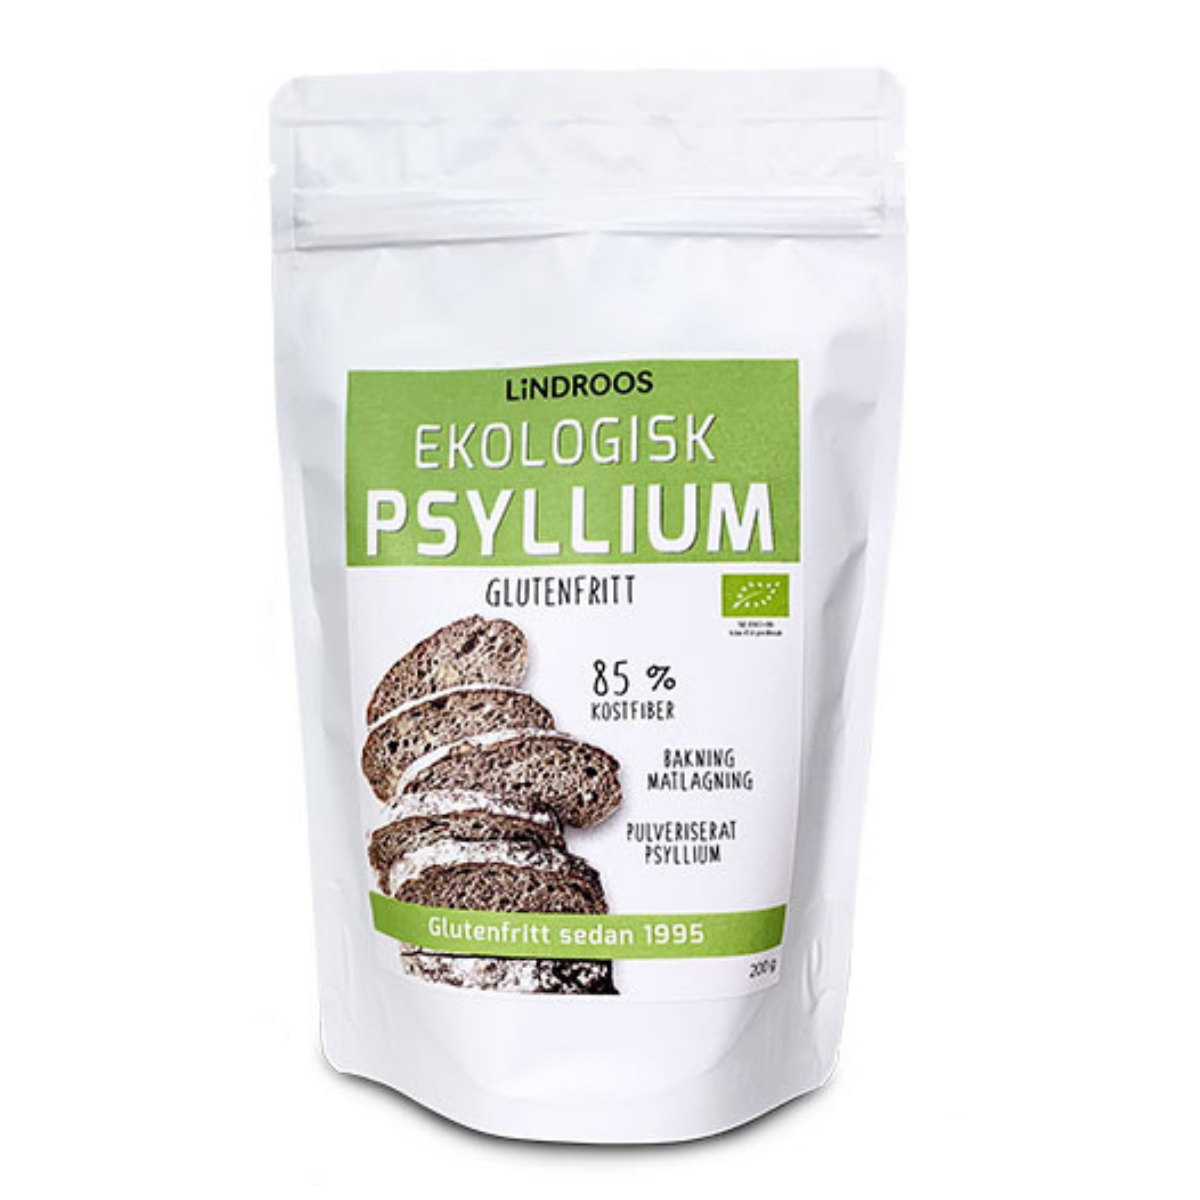 Ekologisk Psyllium